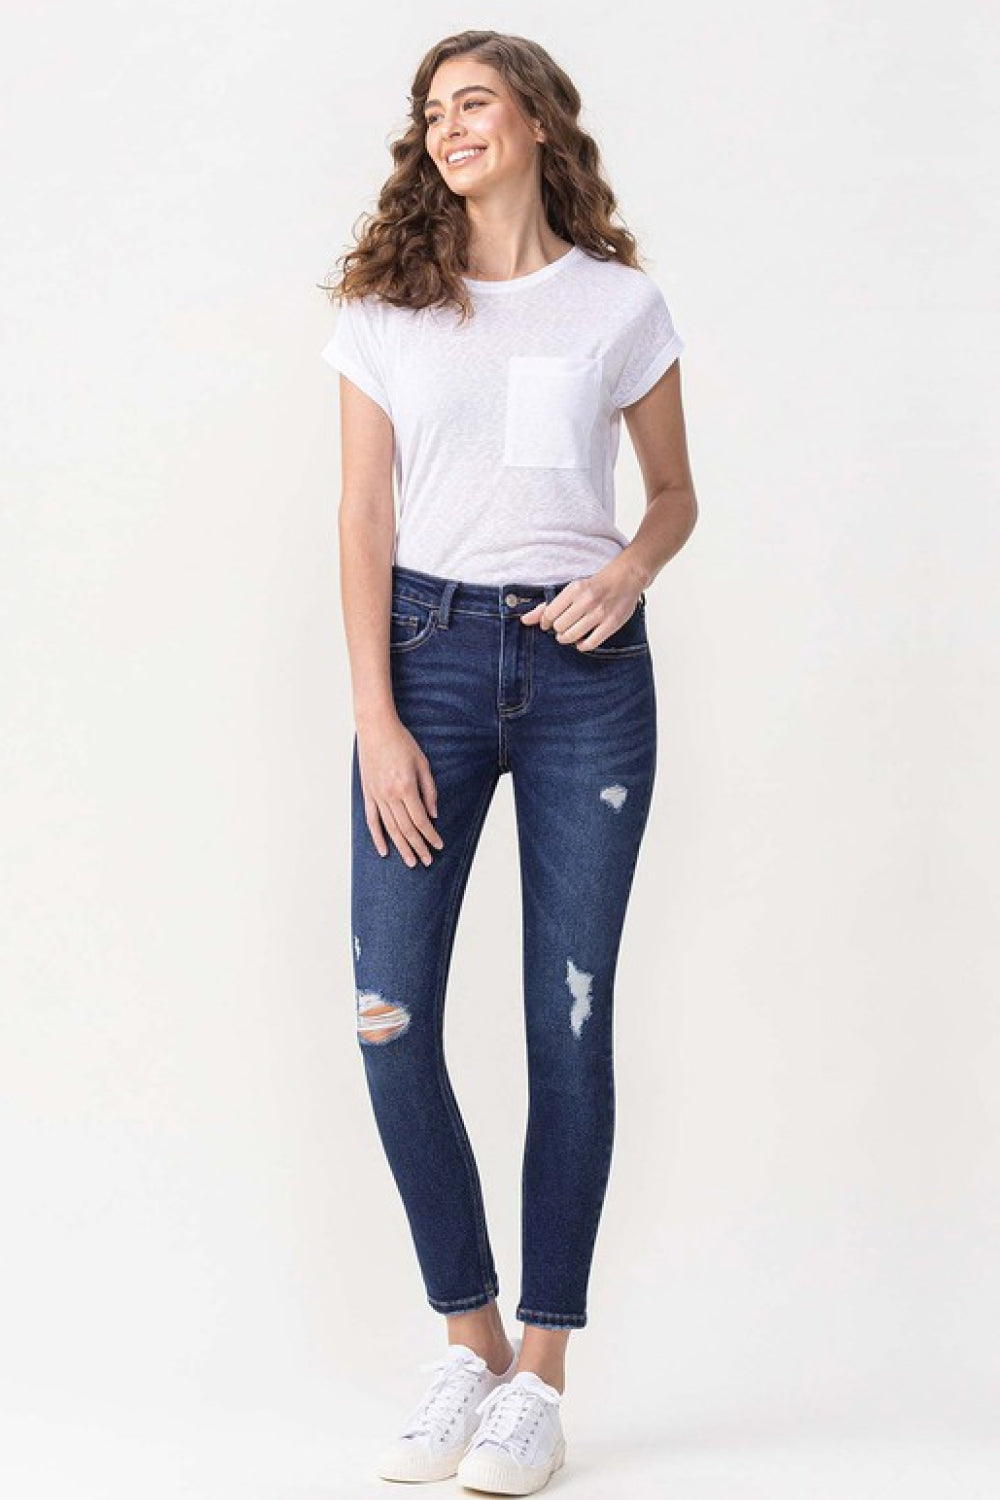 Lovervet Chelsea Midrise Crop Skinny Jeans - Online Only